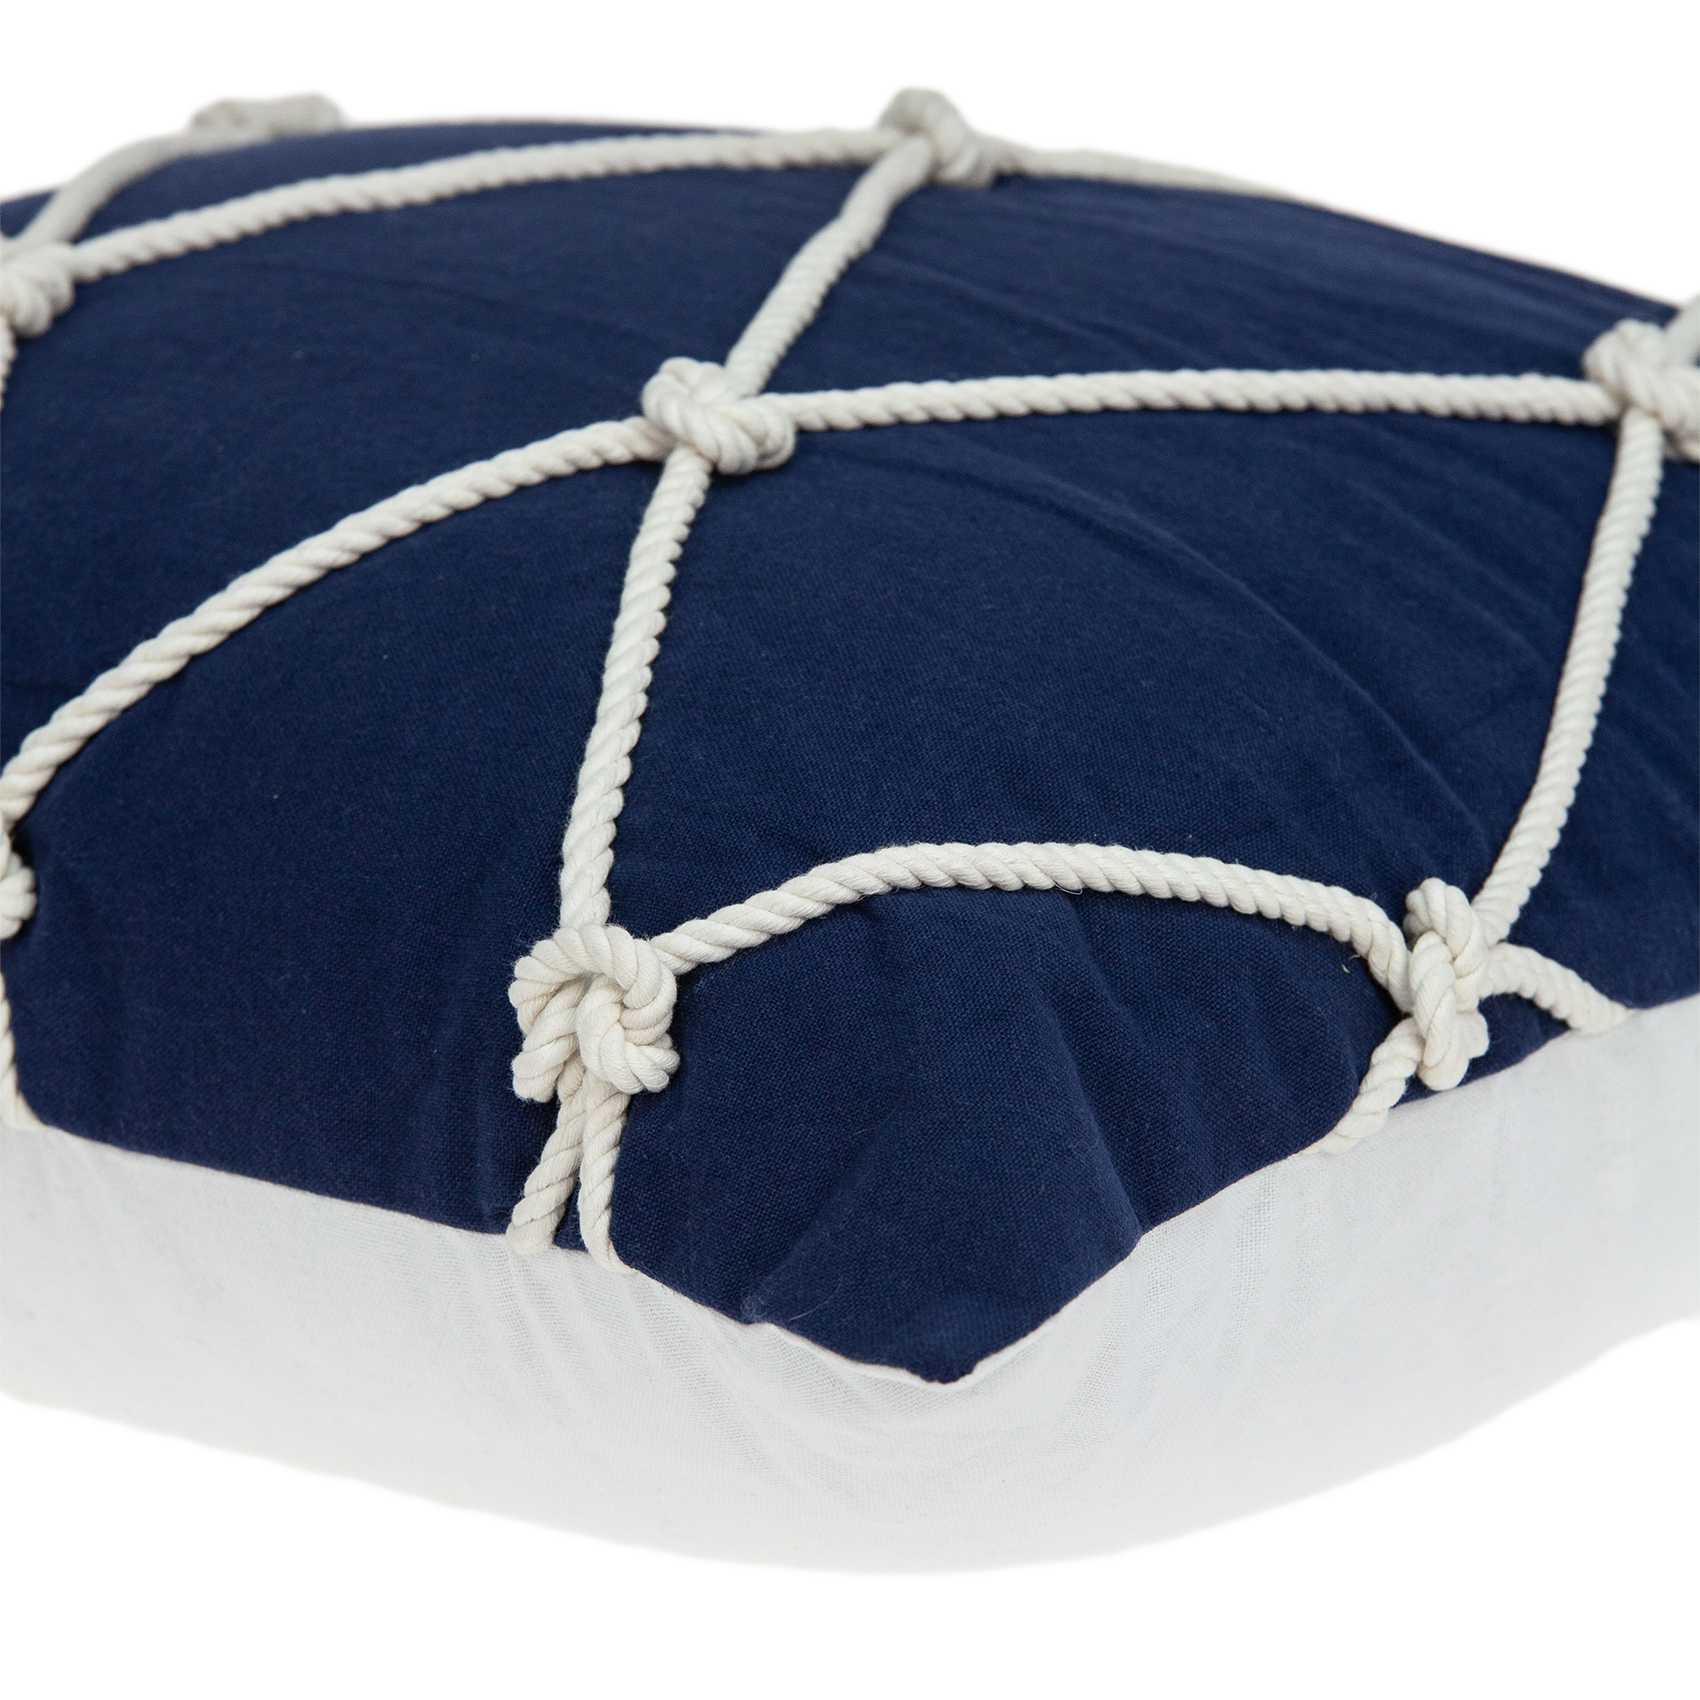 20" x 0.5" x 20" Nautical Blue Pillow Cover